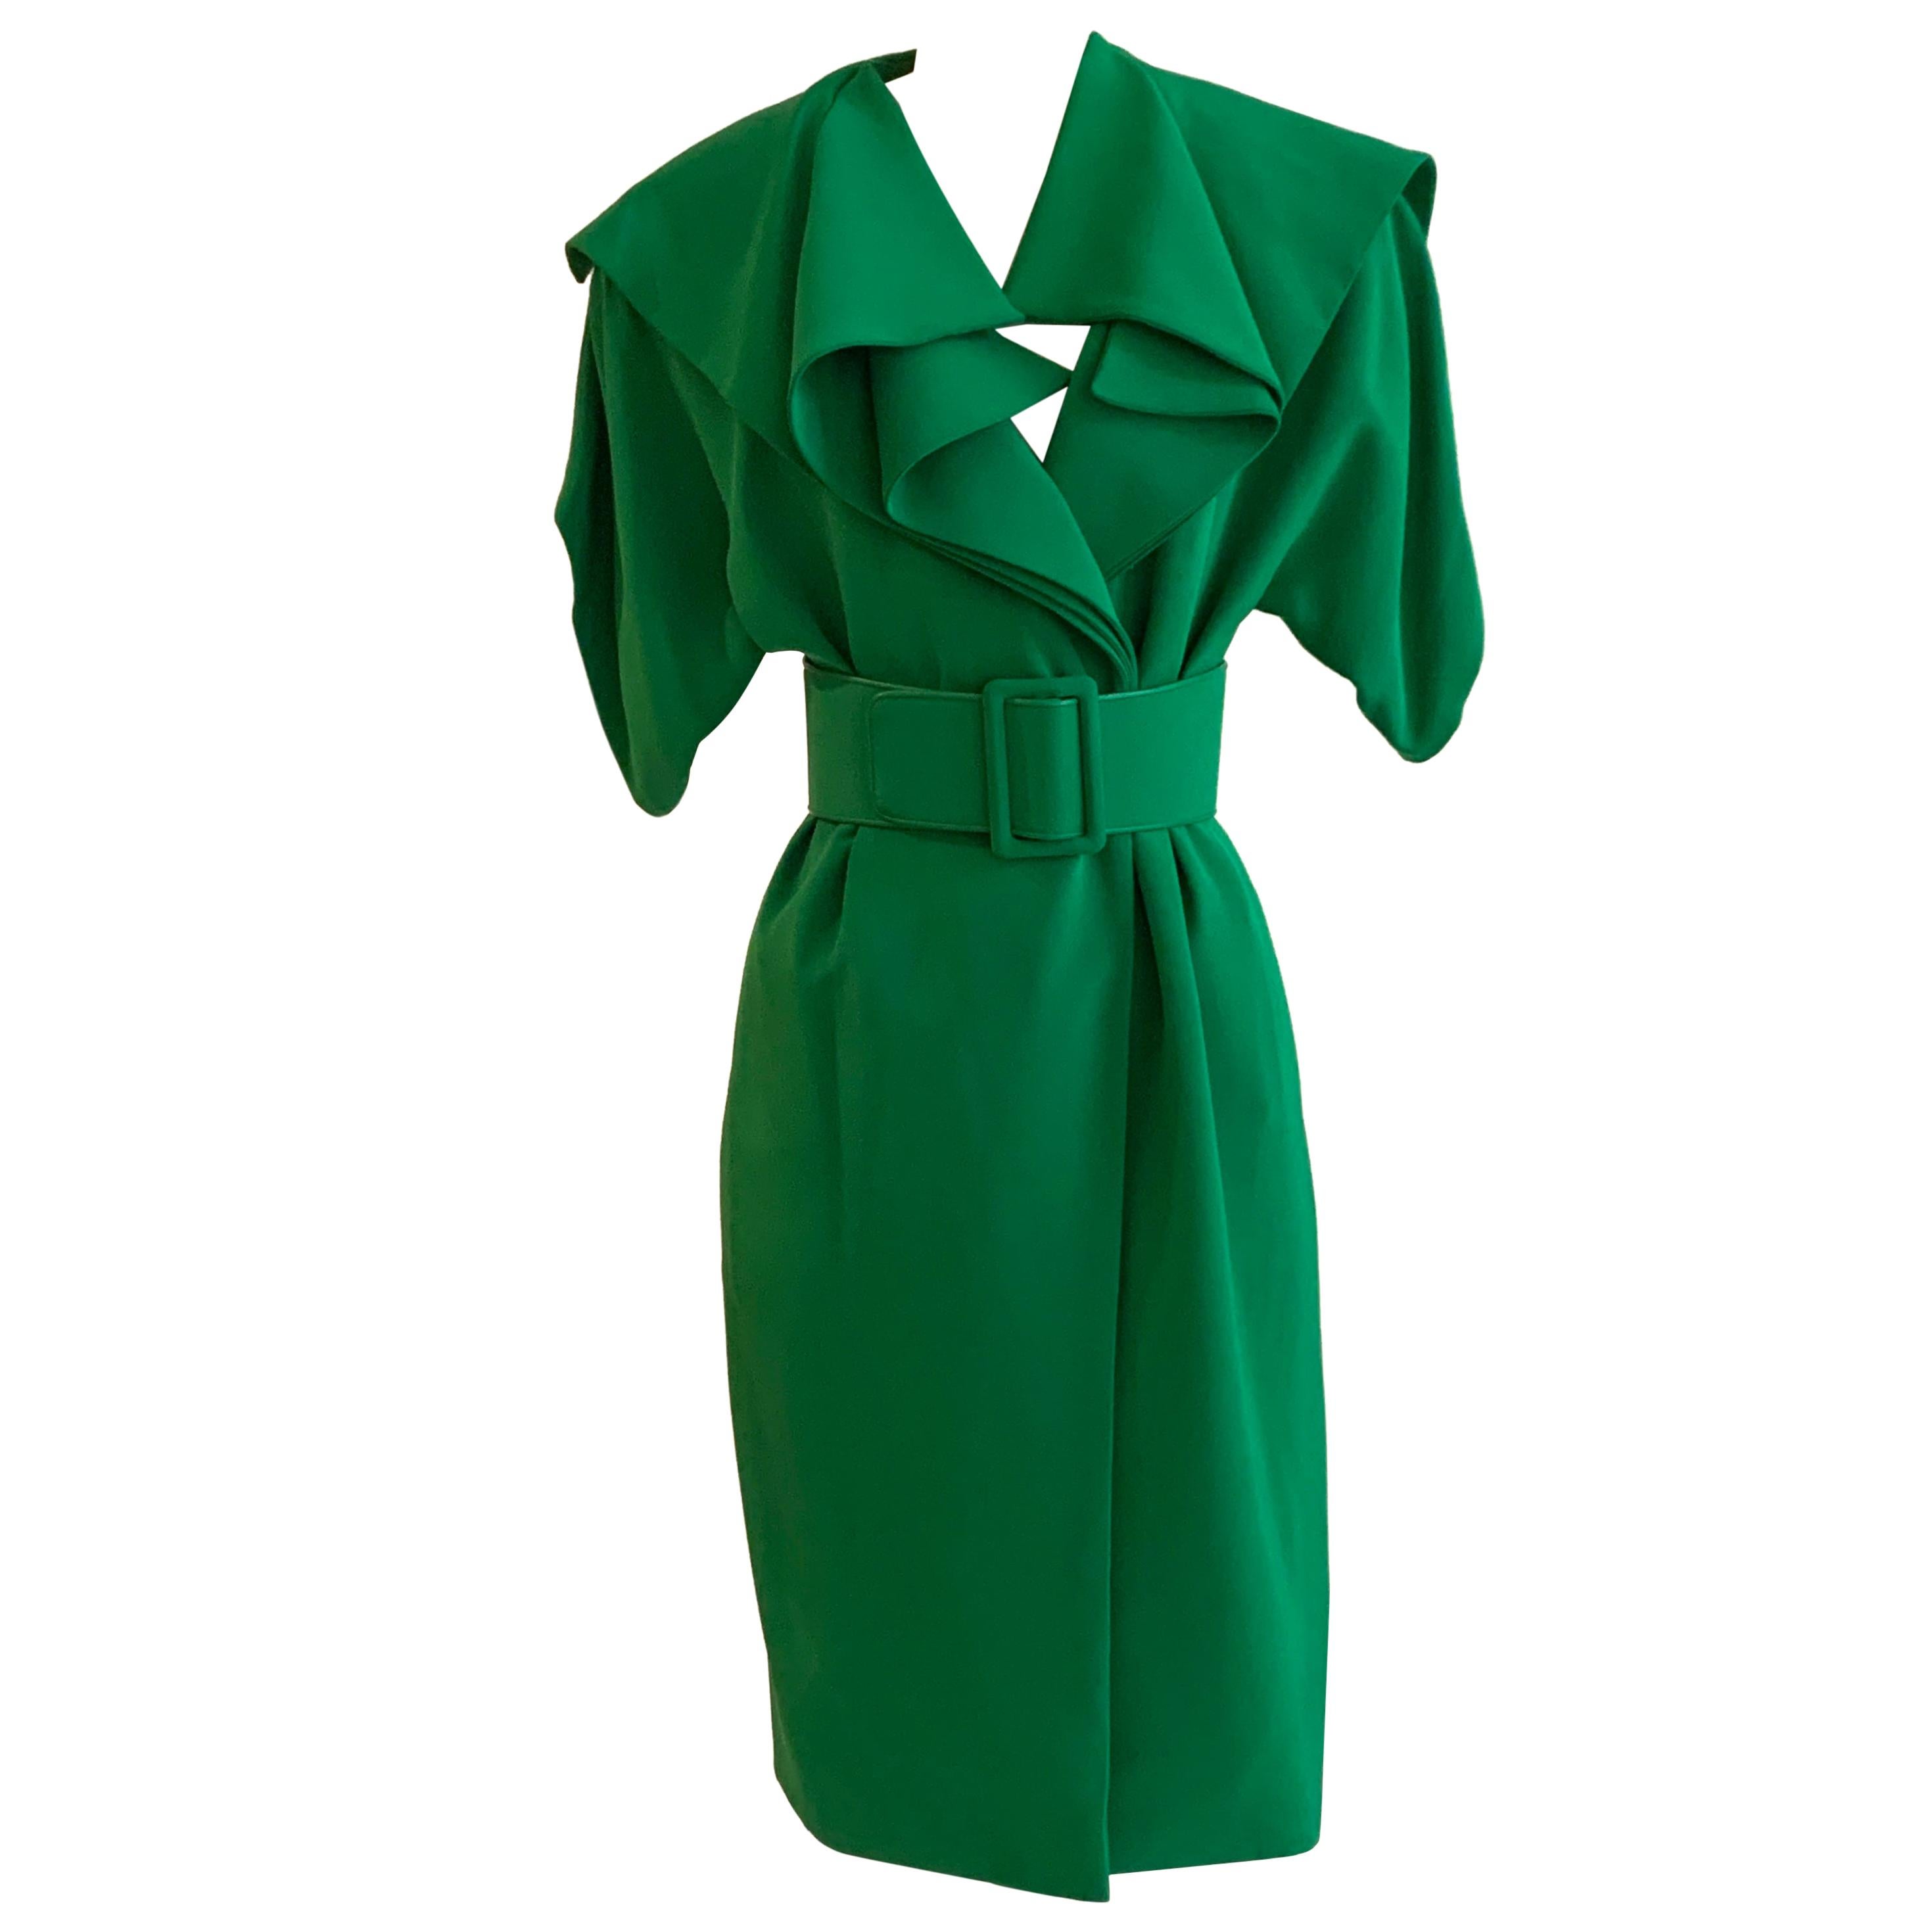 Unworn Galanos 1980s Kelly Green Coat Dress with Draped Shawl Collar